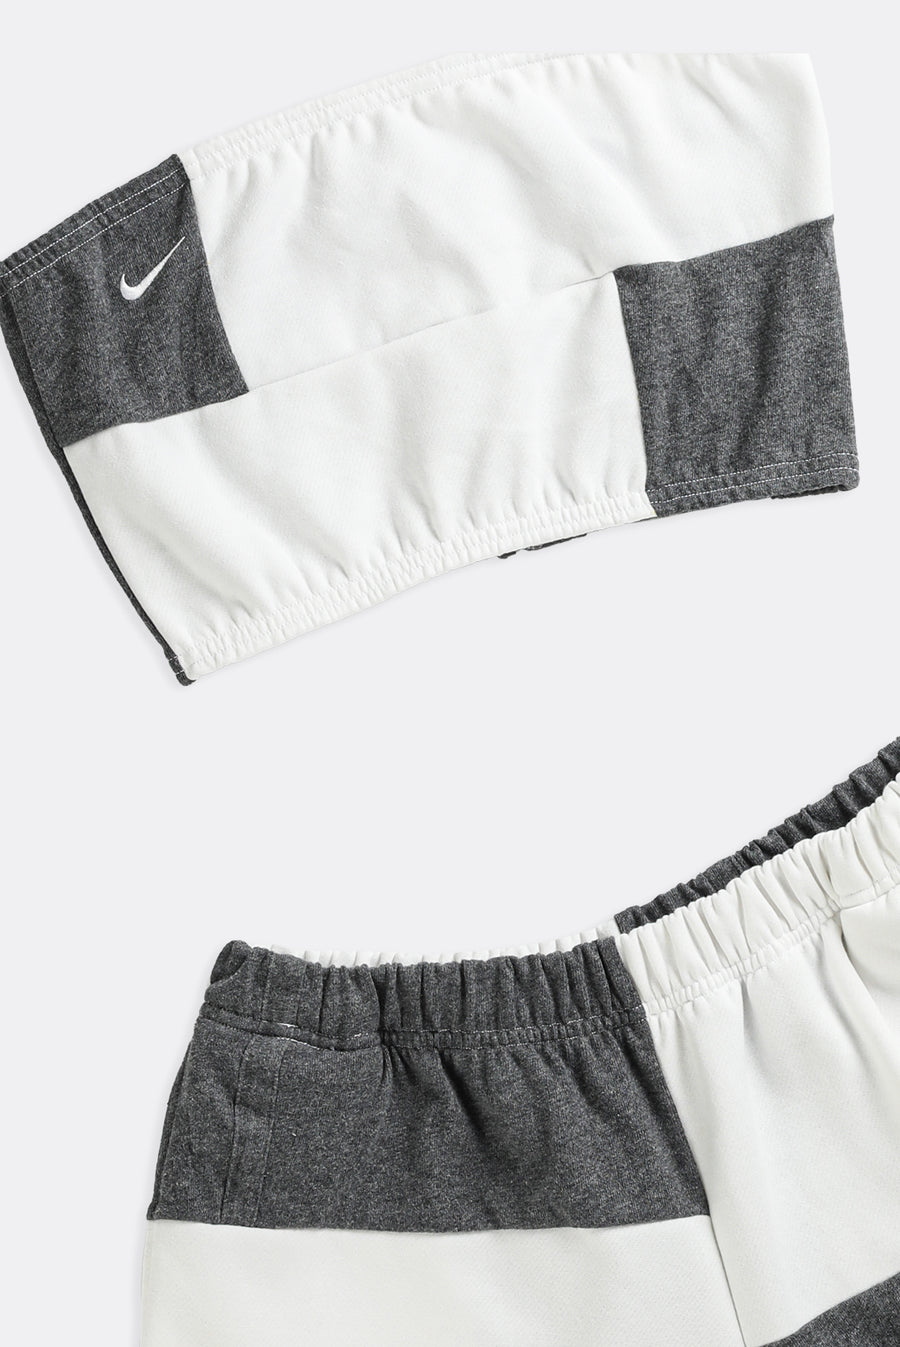 Rework Nike Patchwork Sweatshorts Set - XS, S, M, L, XL